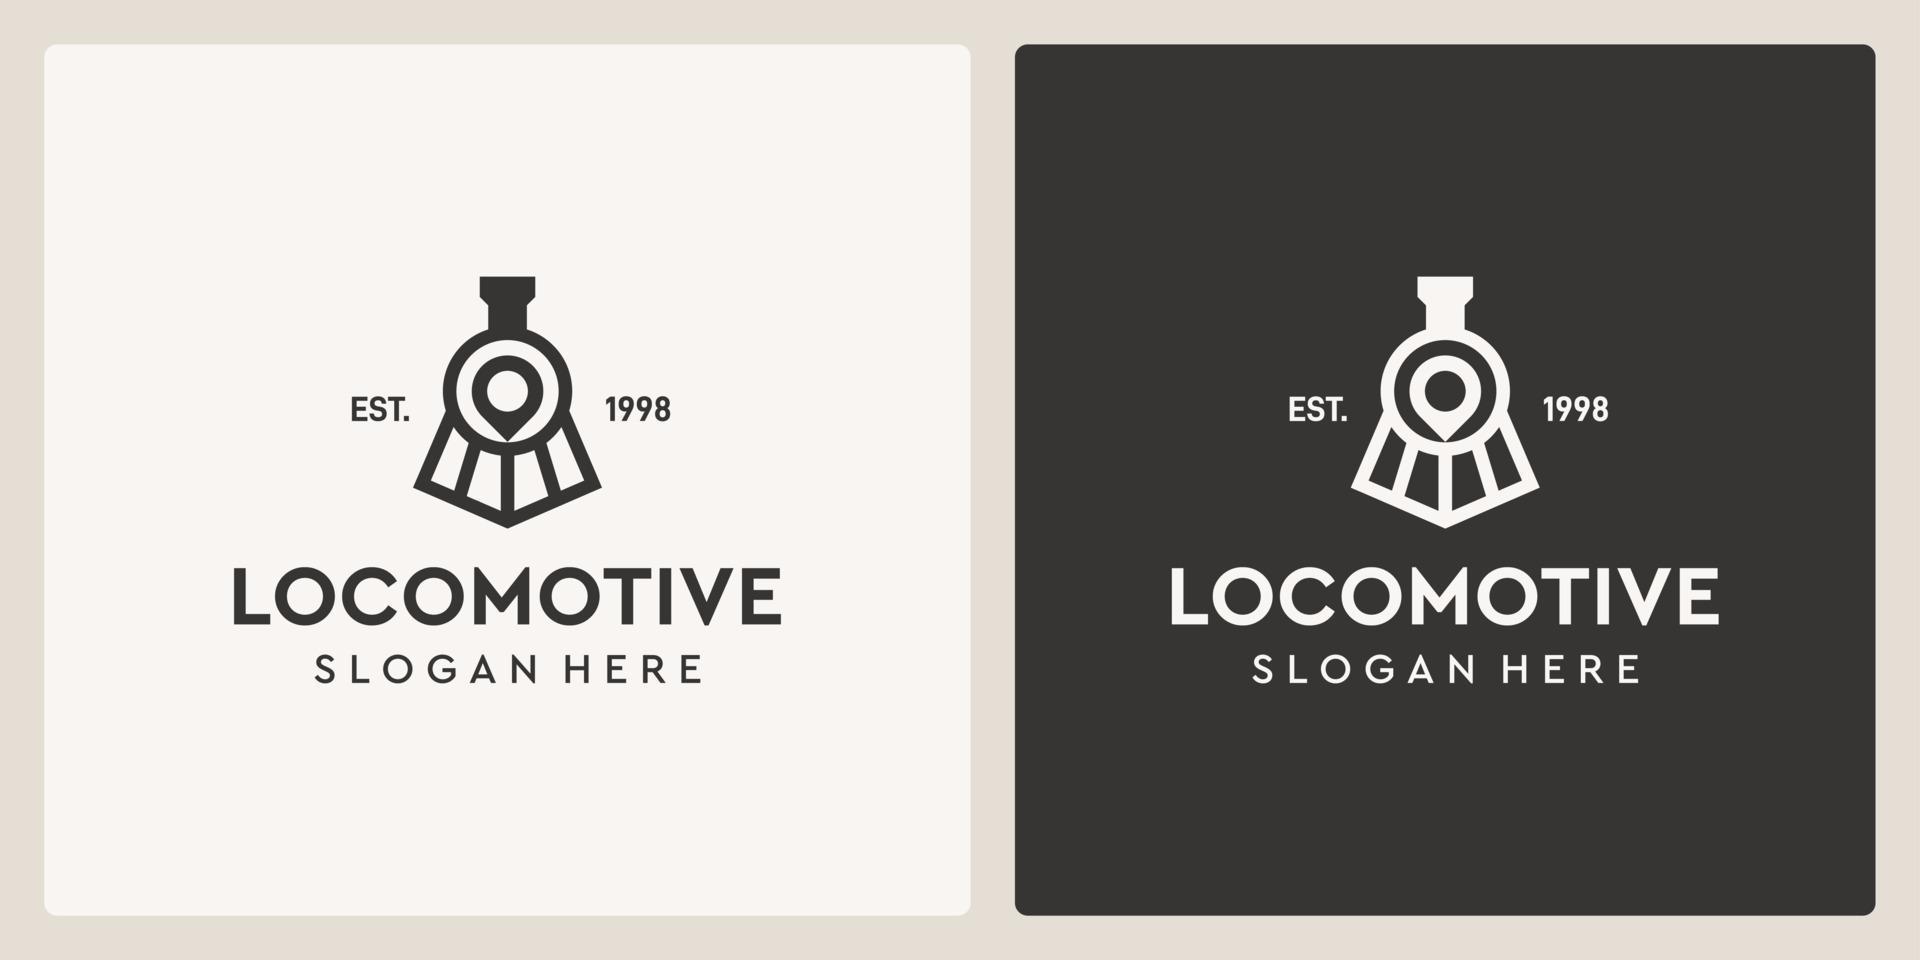 Simple vintage old locomotive train and location logo design template. vector